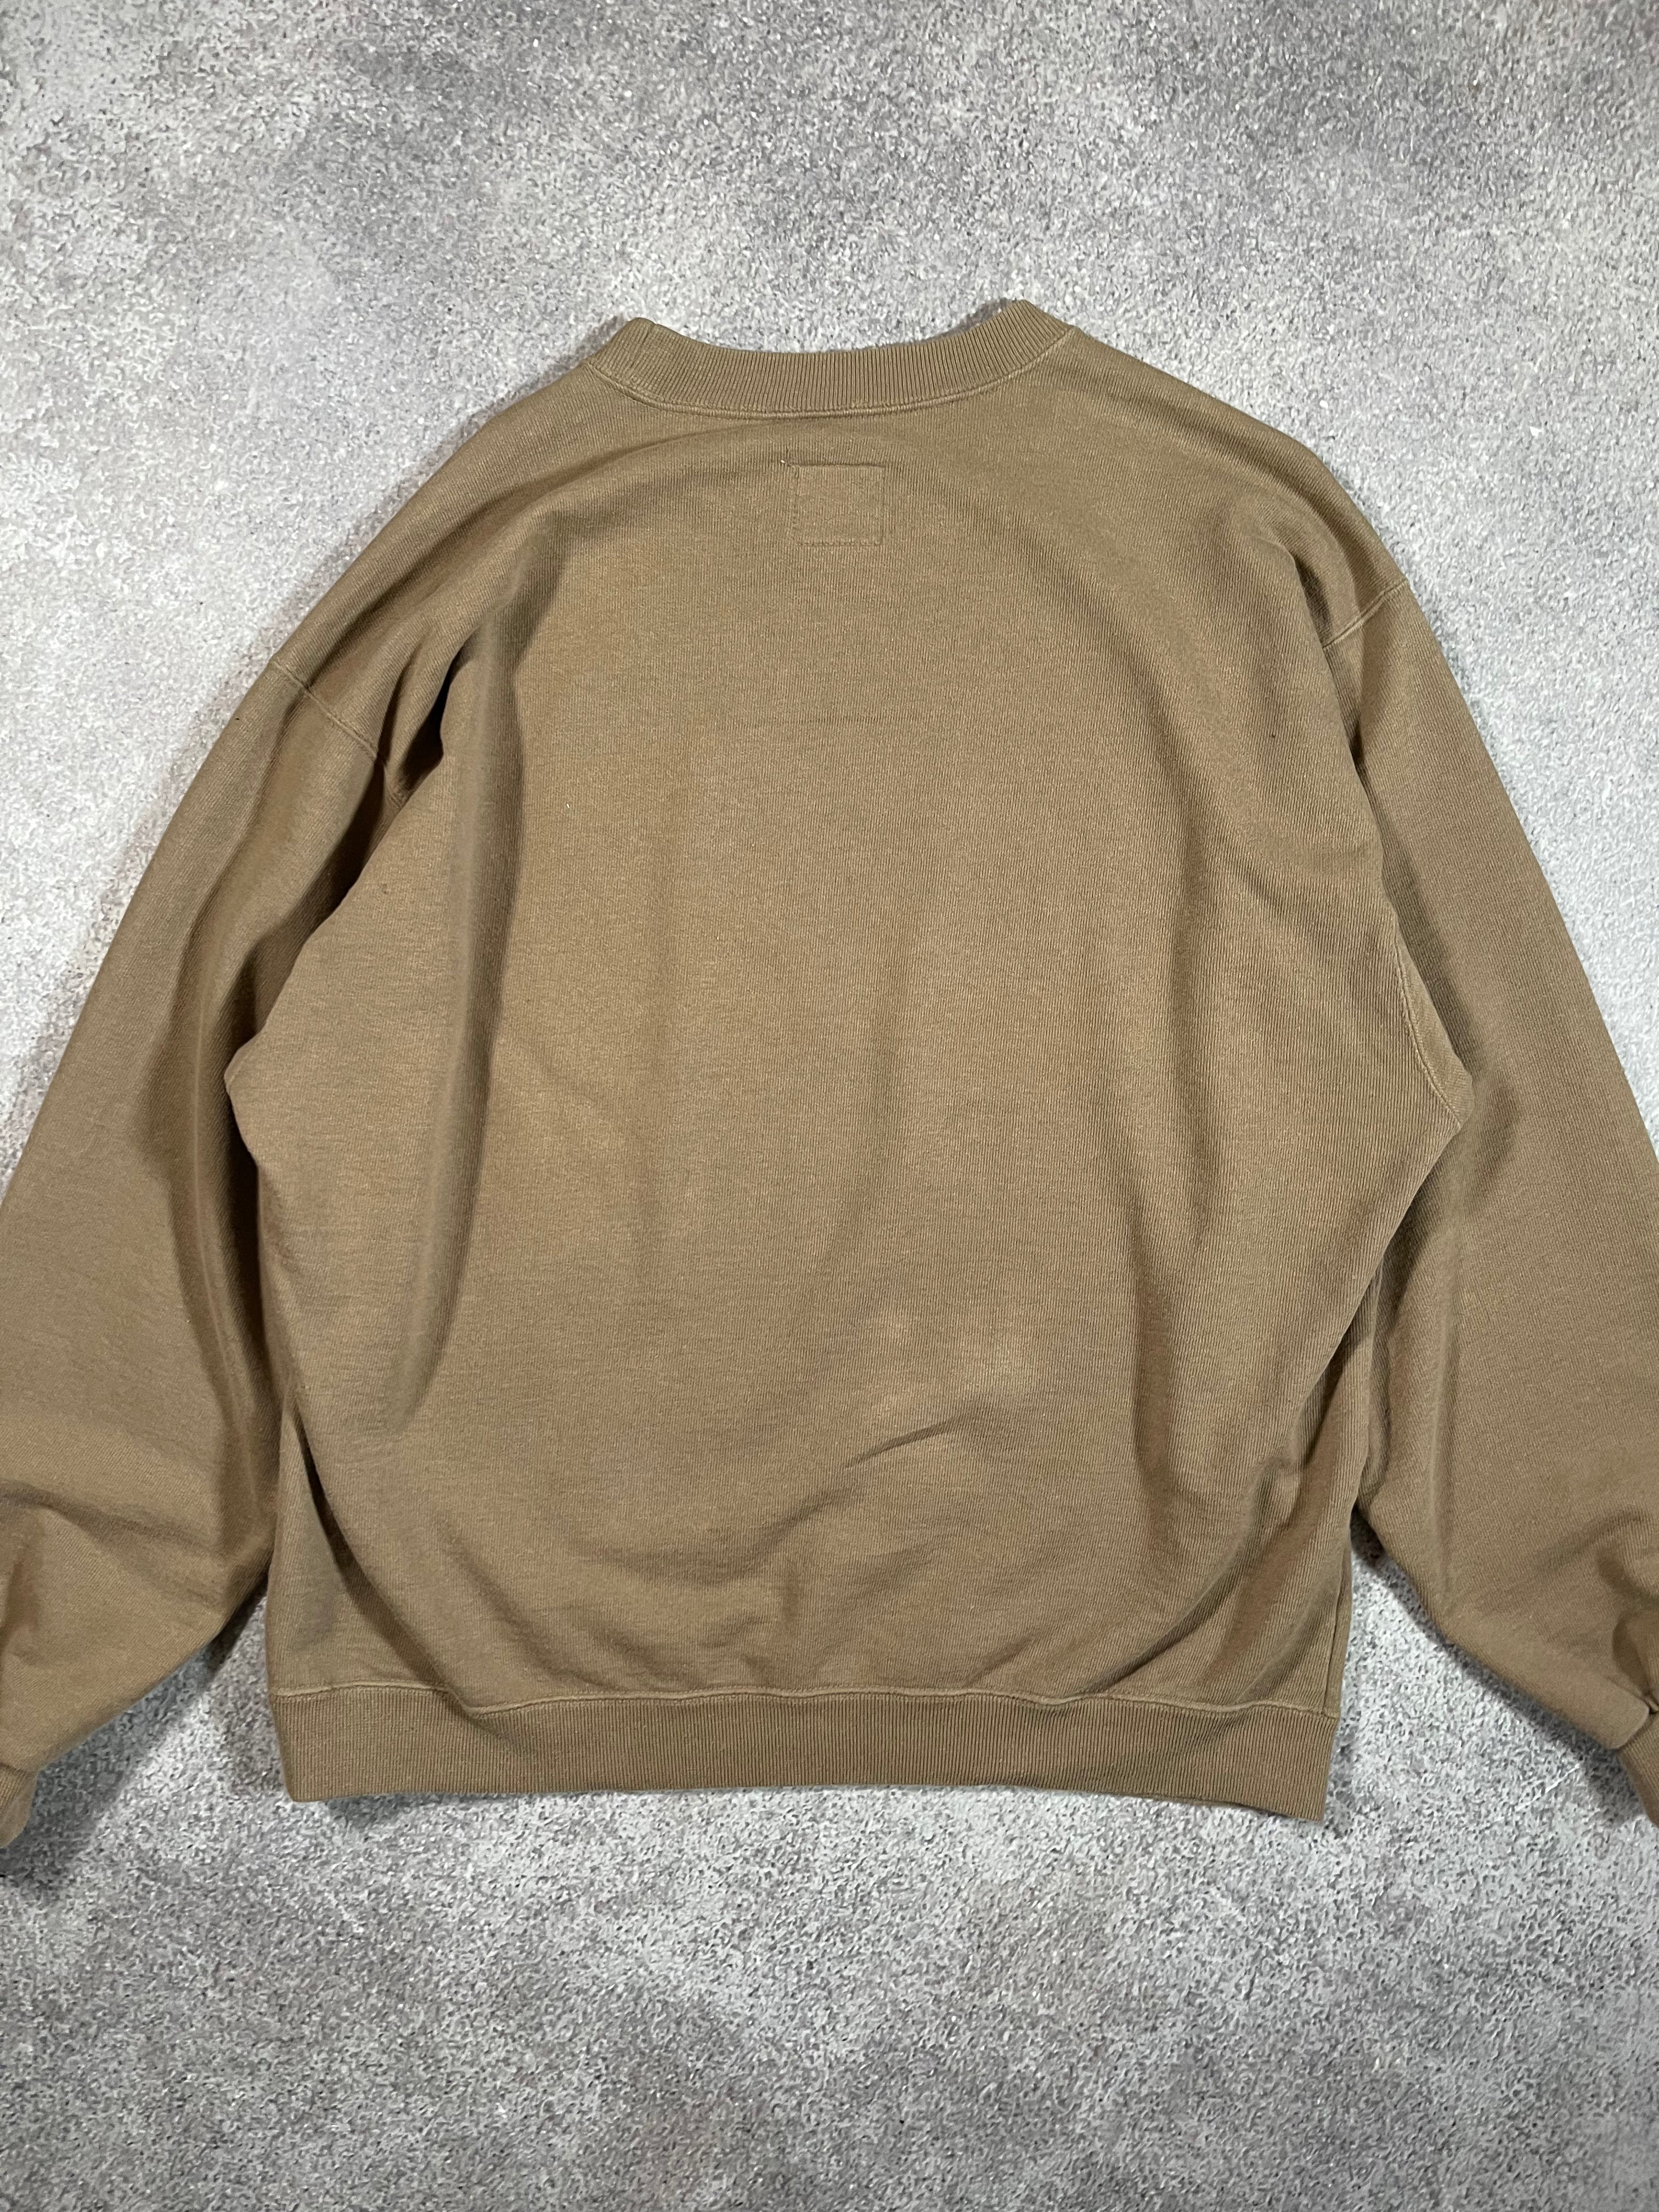 Vintage Nike Sweatshirt Light Brown // Small - RHAGHOUSE VINTAGE